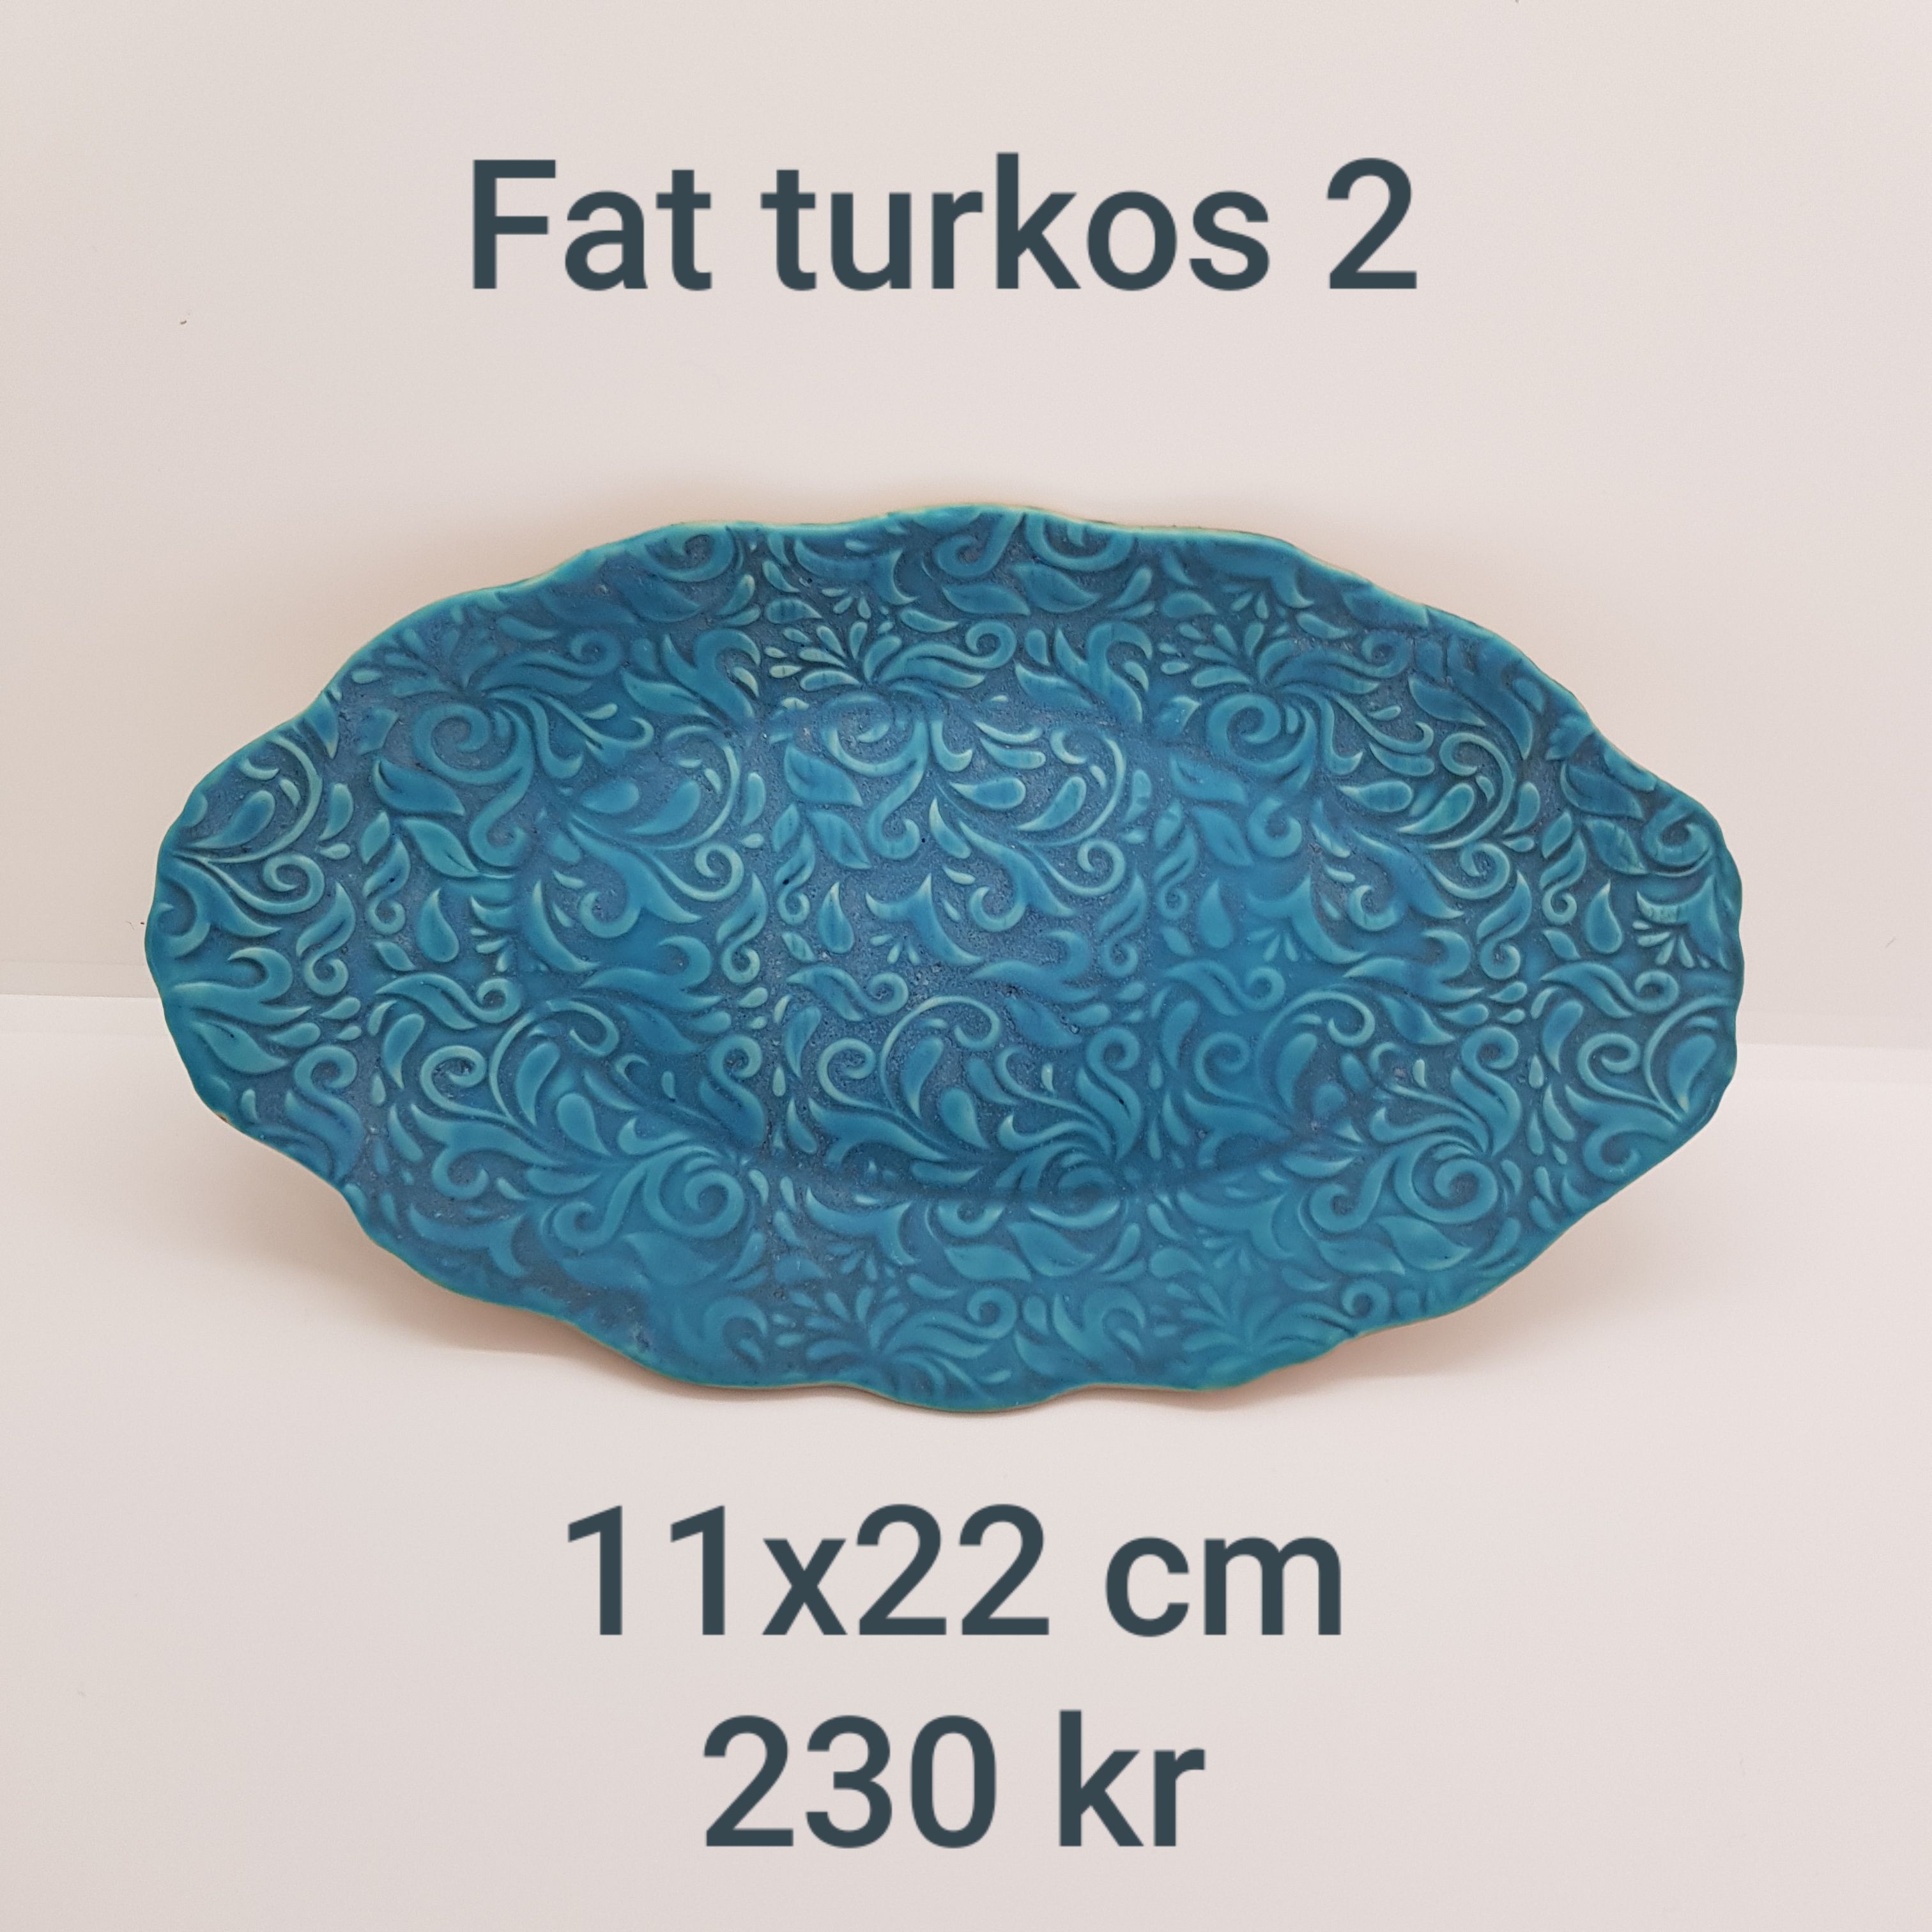 a fat turkos 2